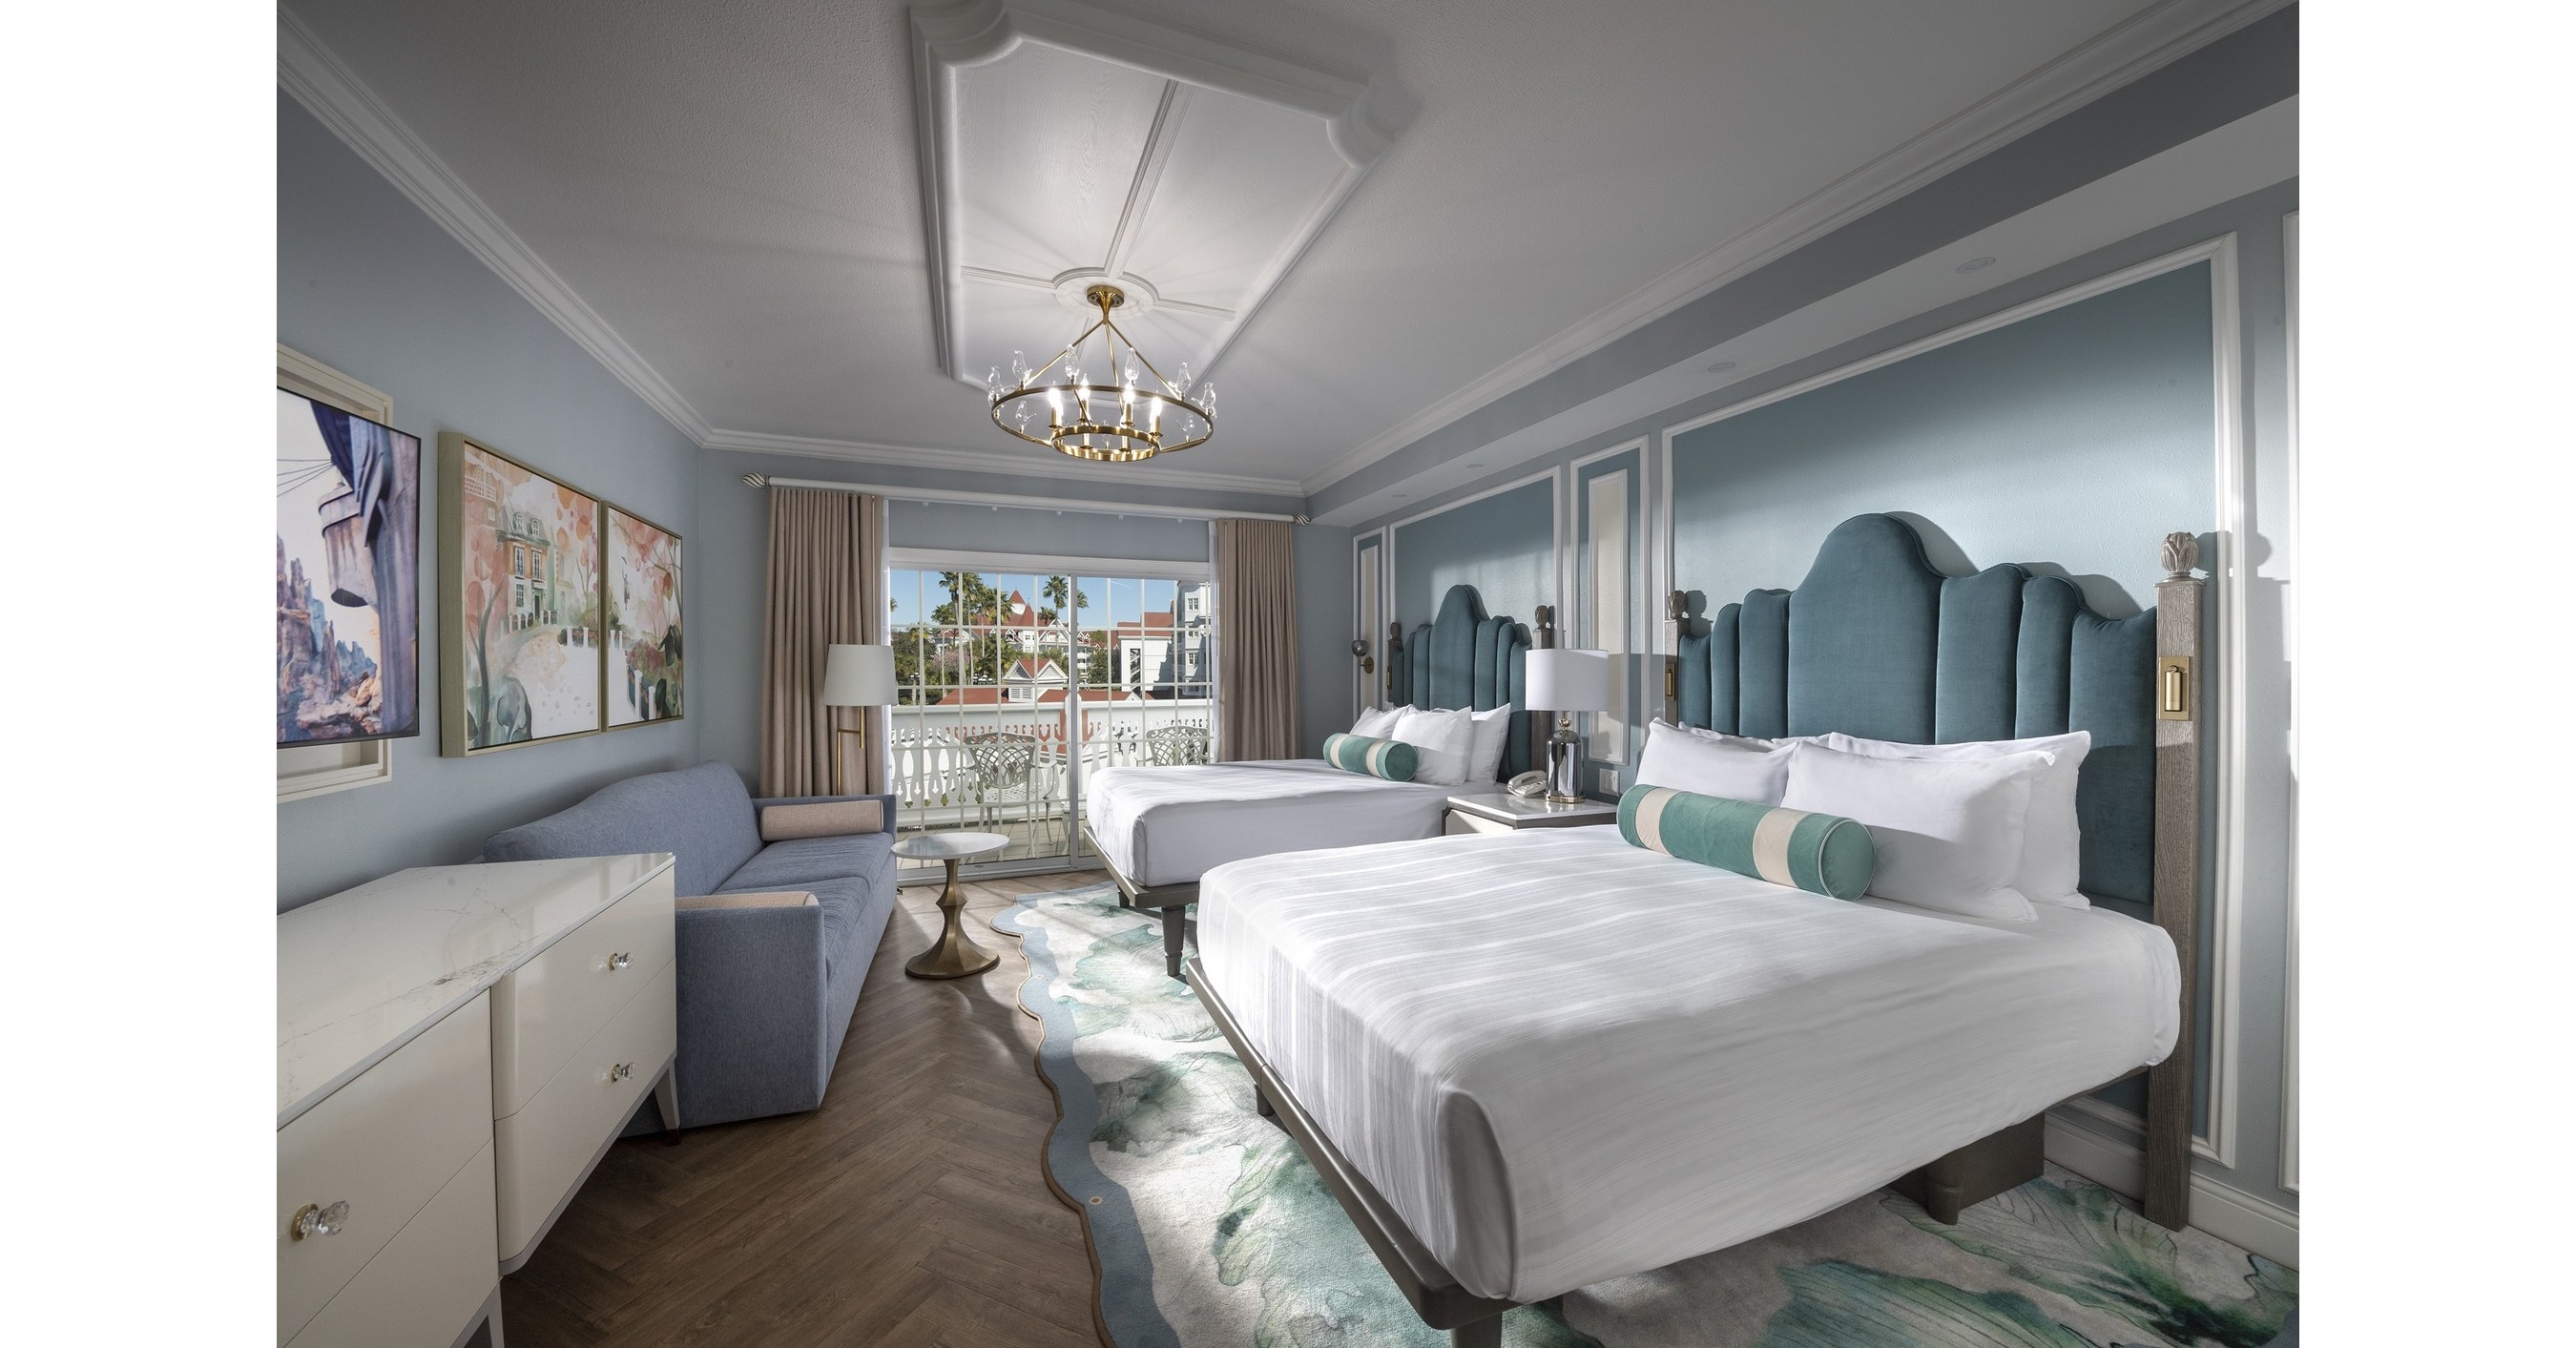 Sales Begin for New Disney Vacation Club Villas at Disney's Grand Floridian Resort & Spa